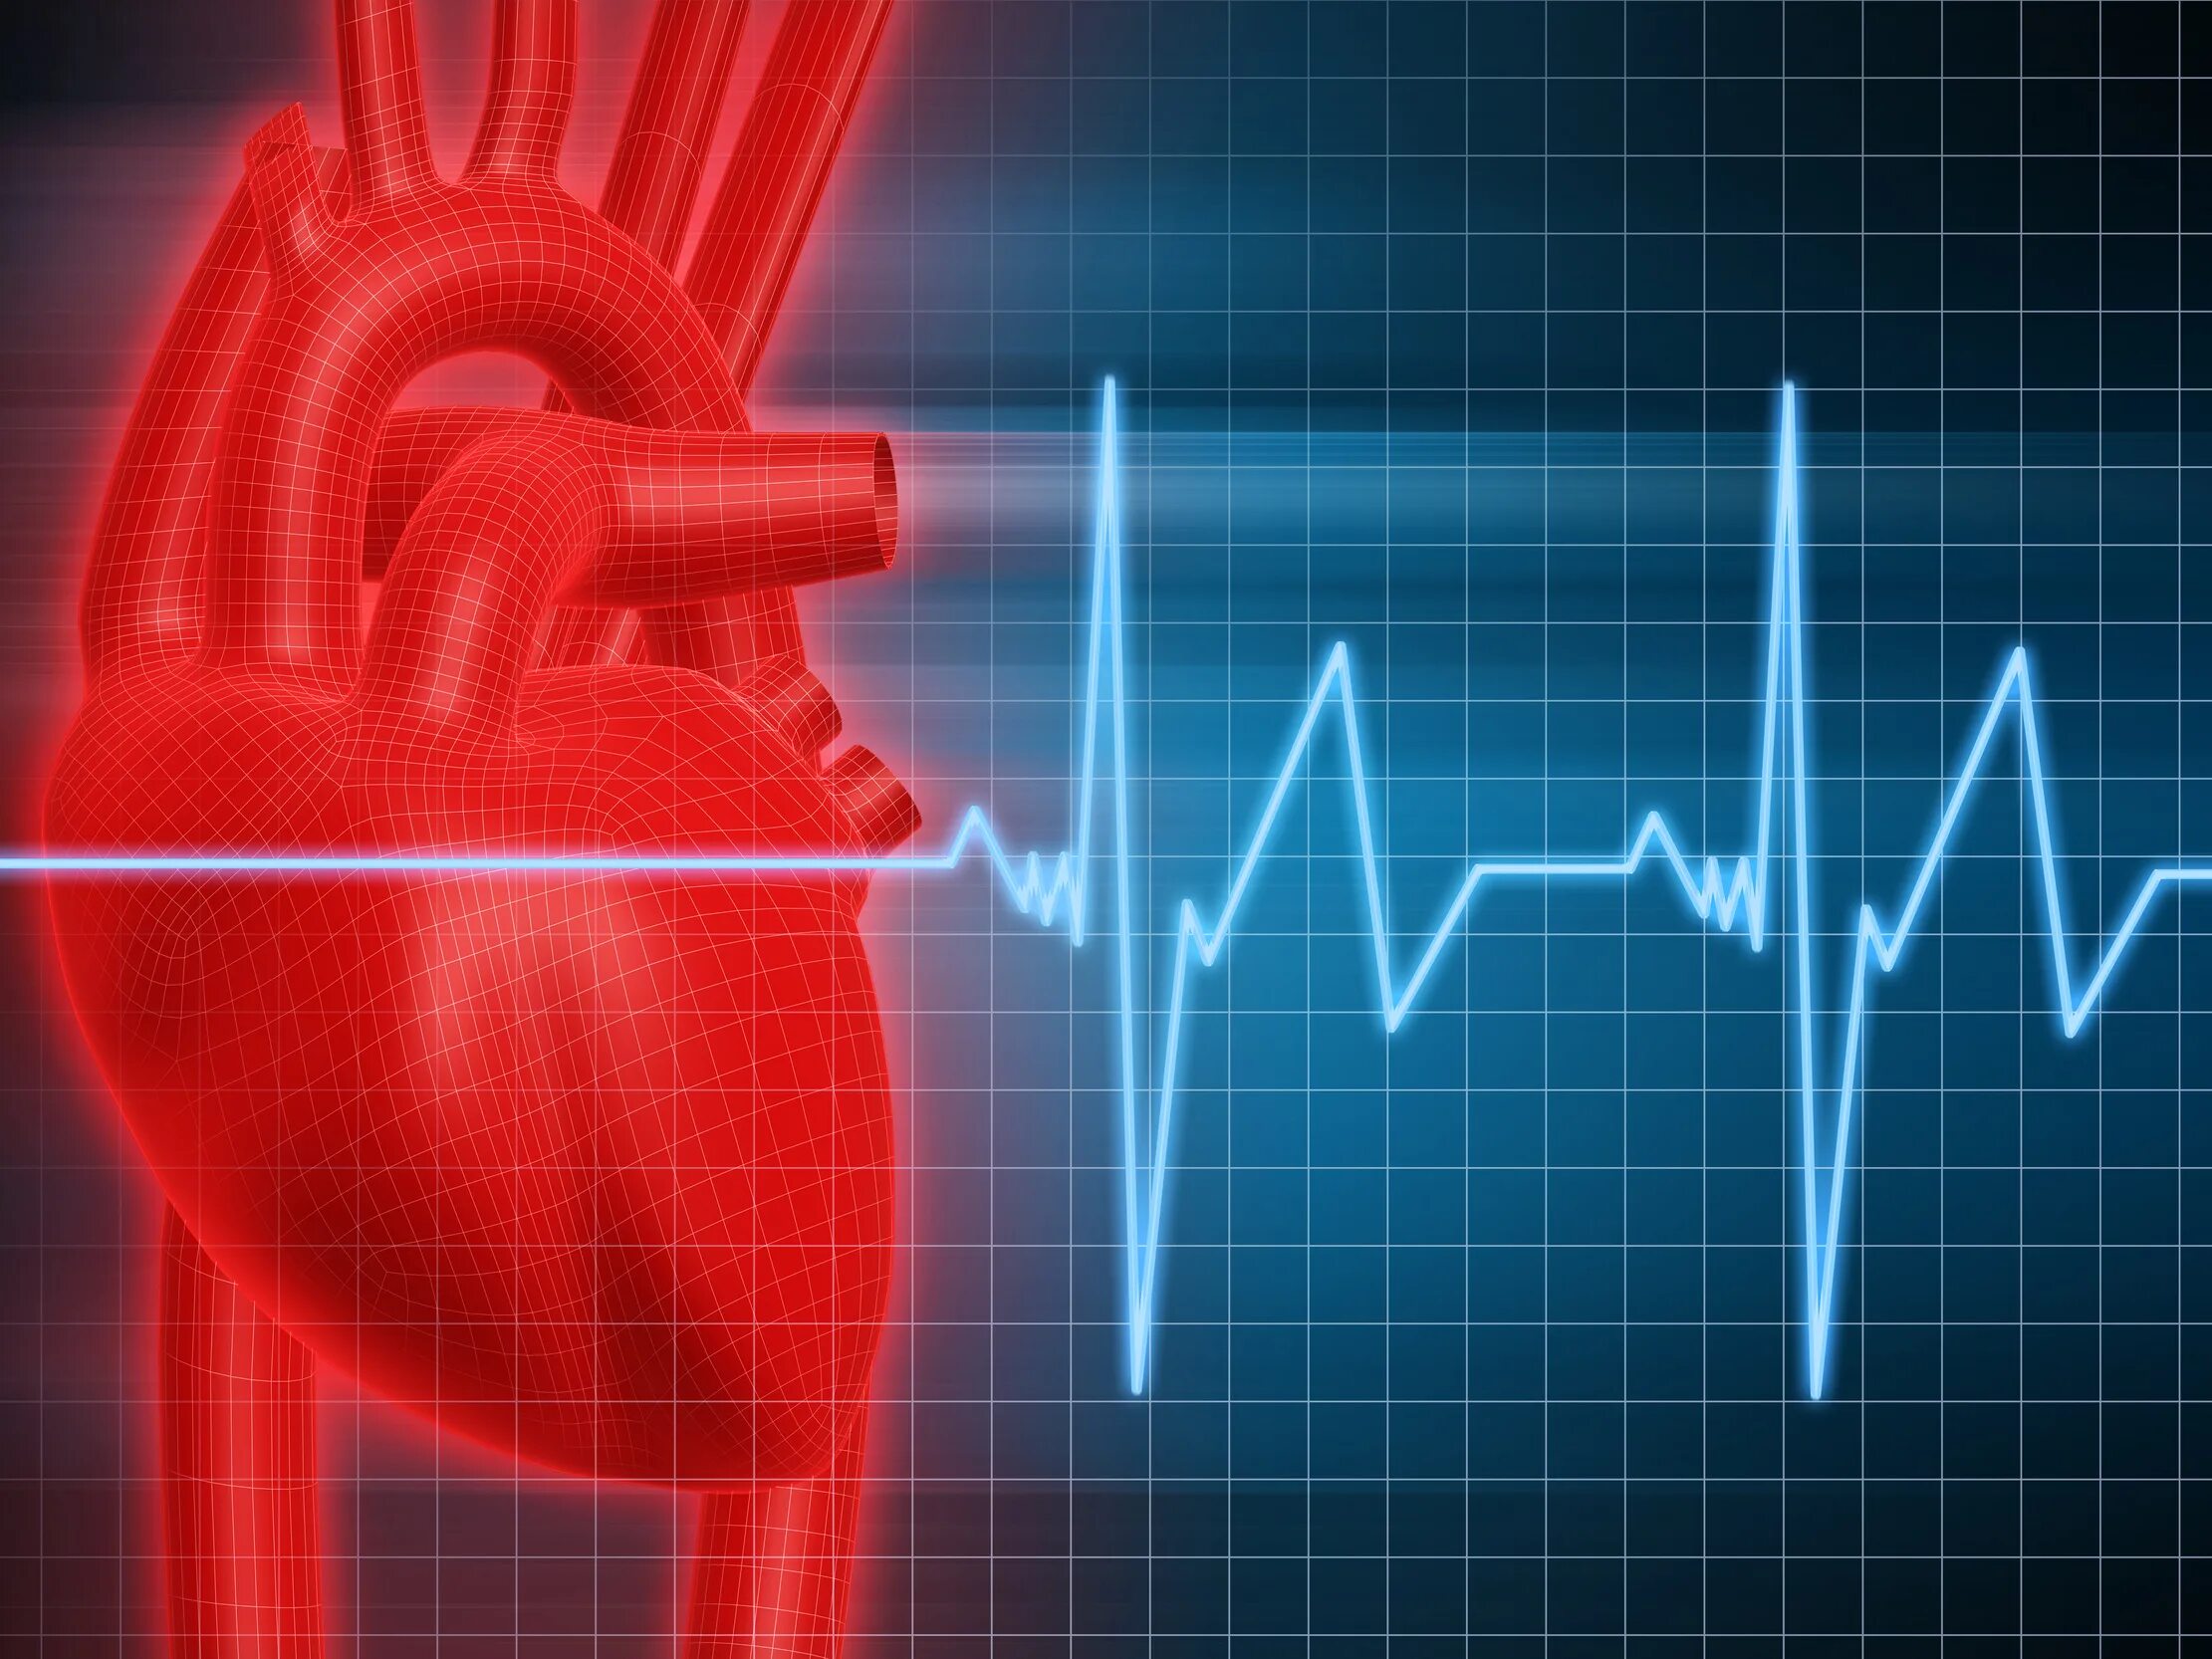 Сердцебиение болезнь. "Ритм" (сердечный). Кардиология аритмии. Нарушение сердечного ритма.